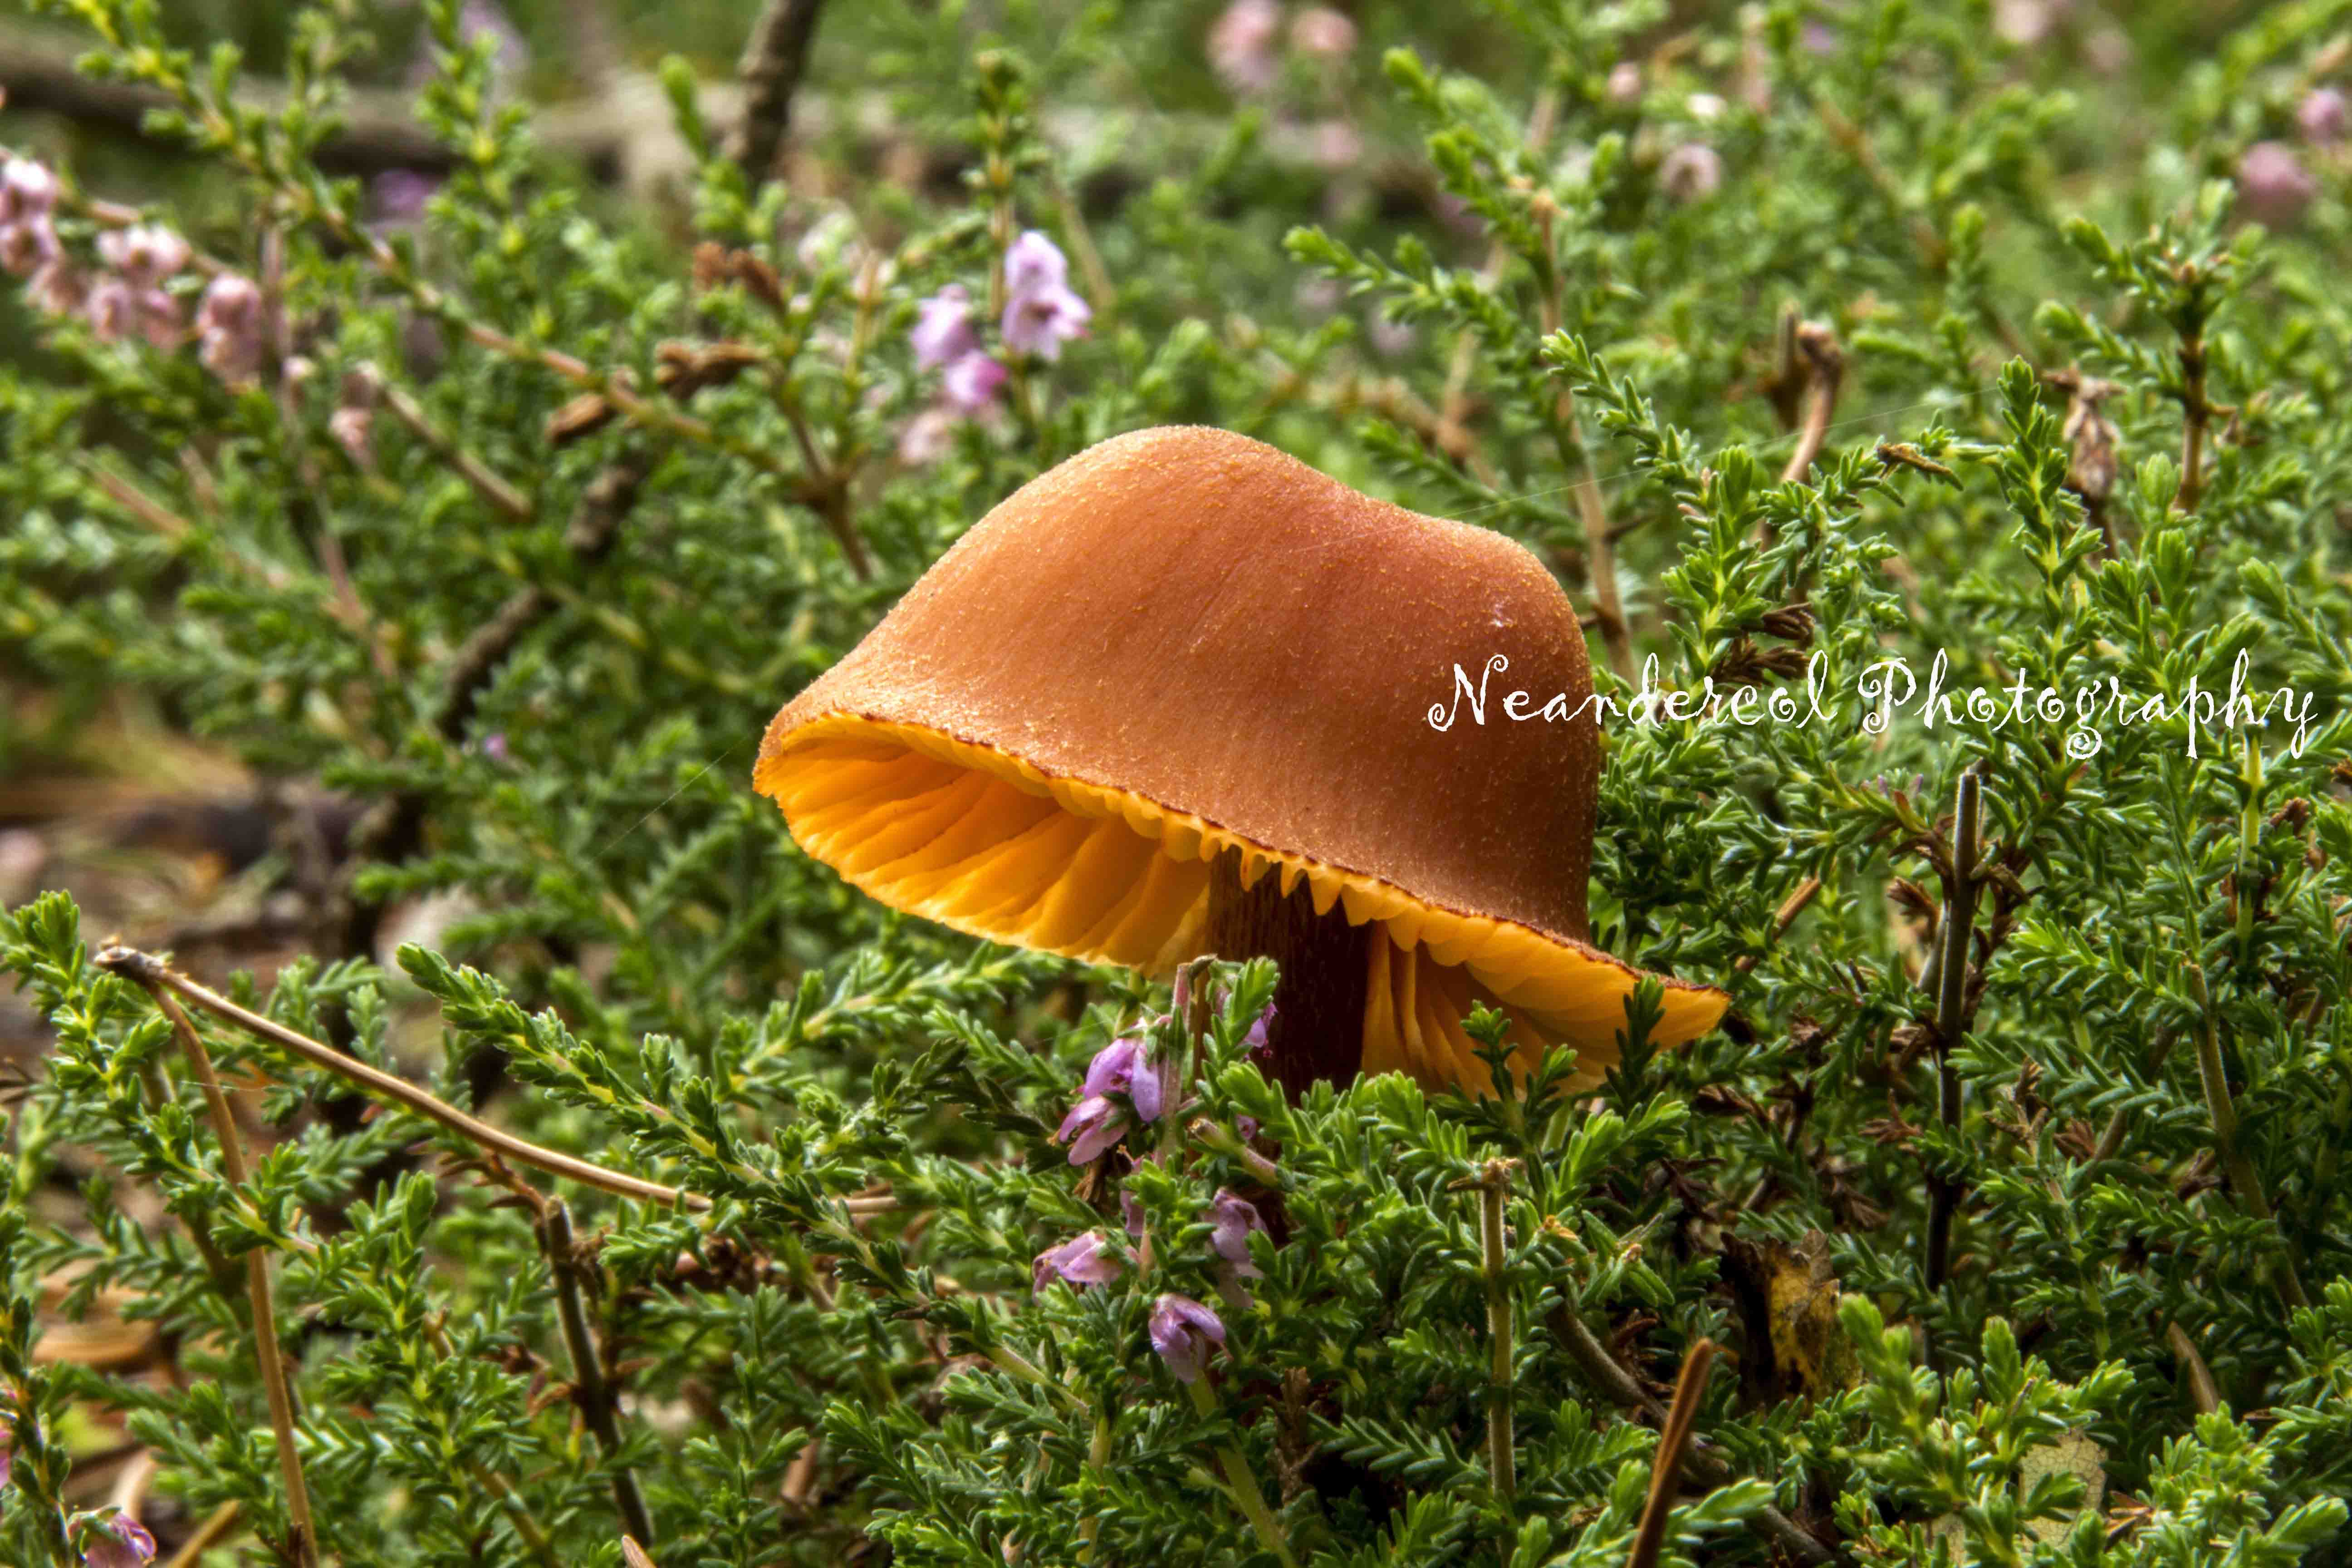 Fungus, England